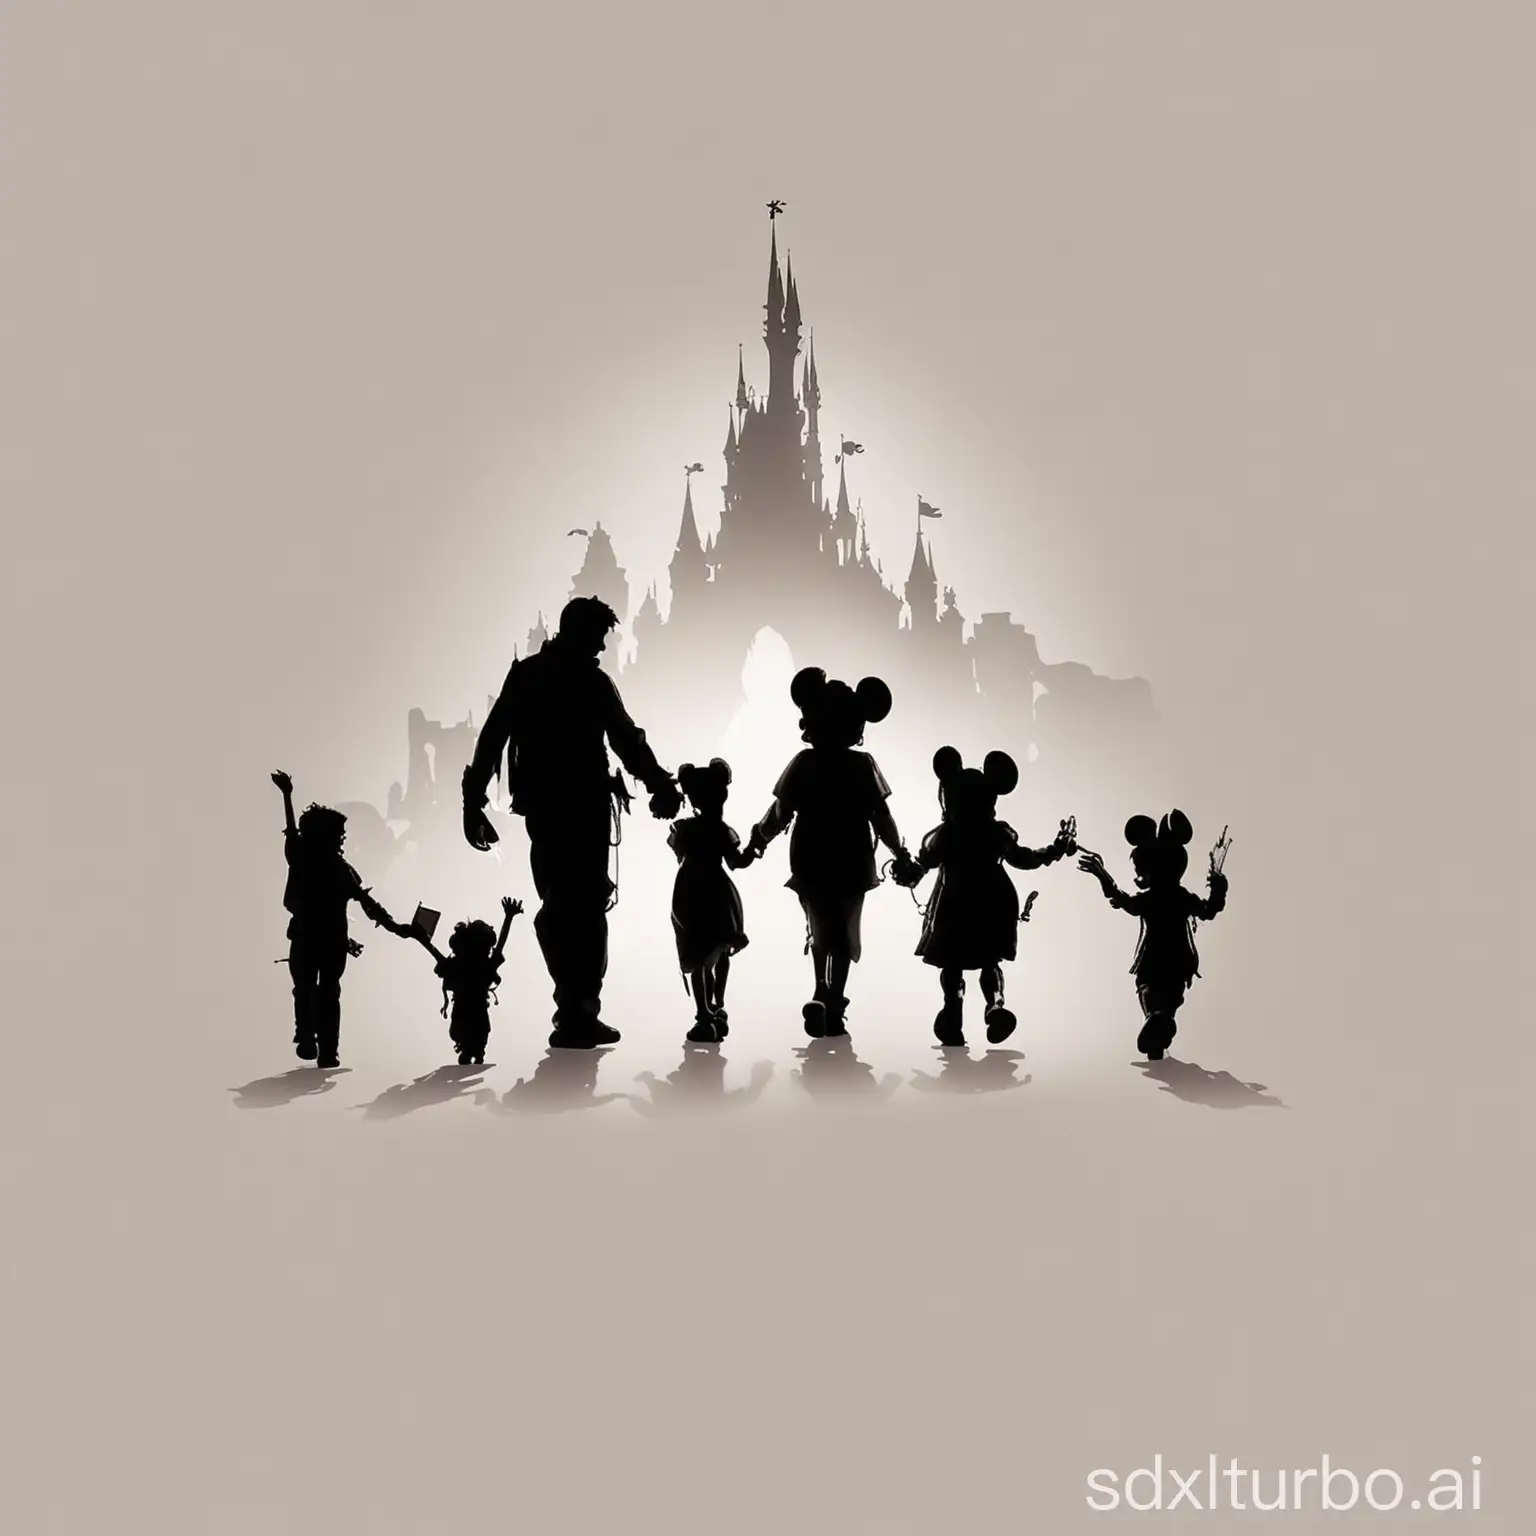 Disney-Characters-Walking-Hand-in-Hand-Towards-Disneyland-Silhouette-Art